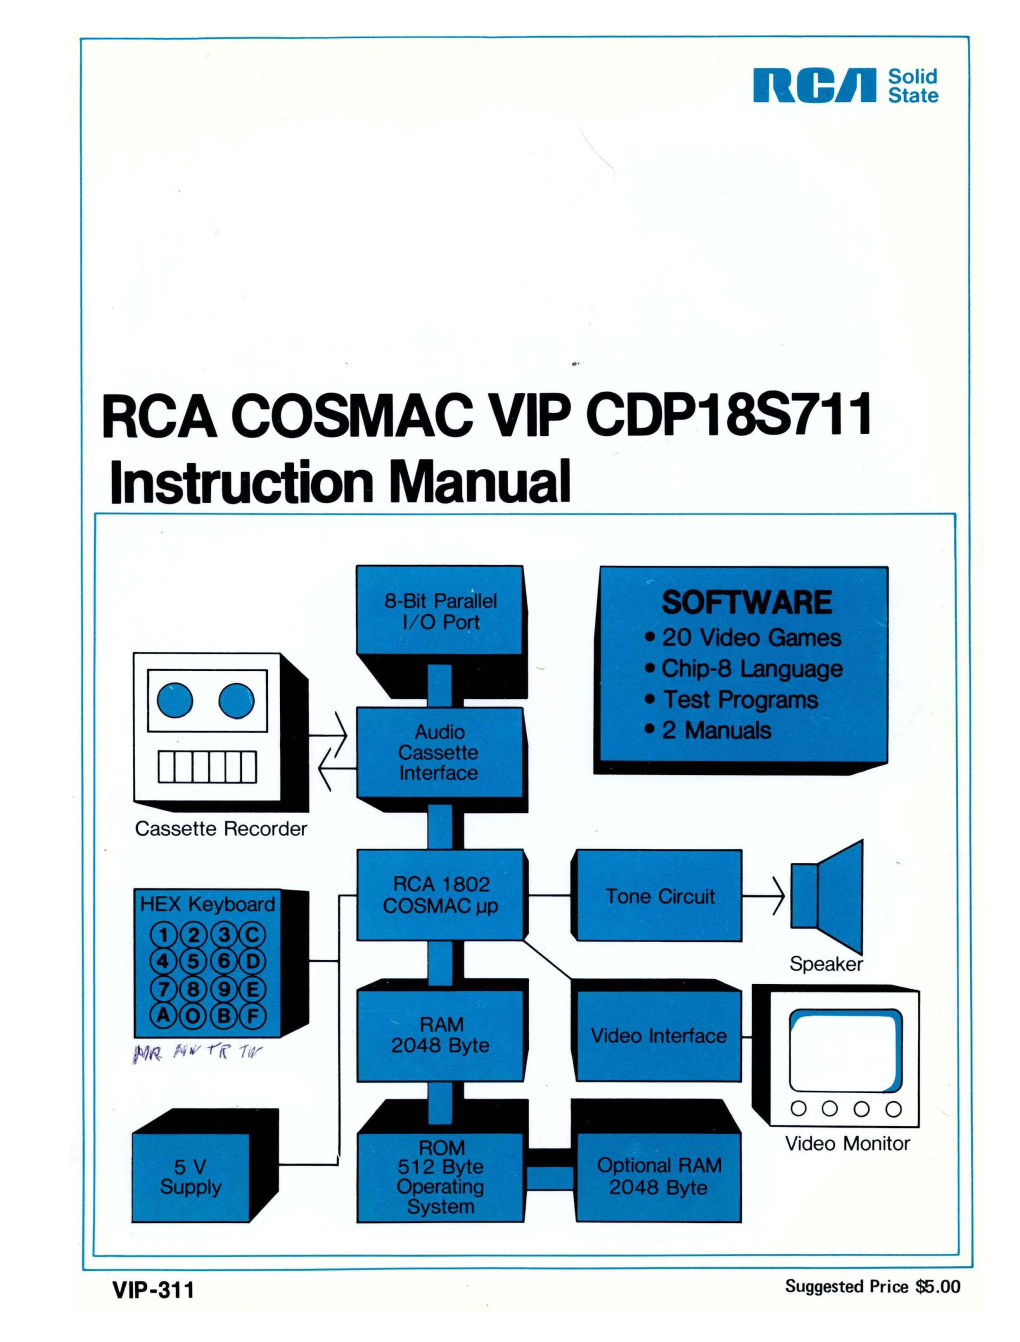 RCA COSMAC VIP CDP188711 Instruction Manual